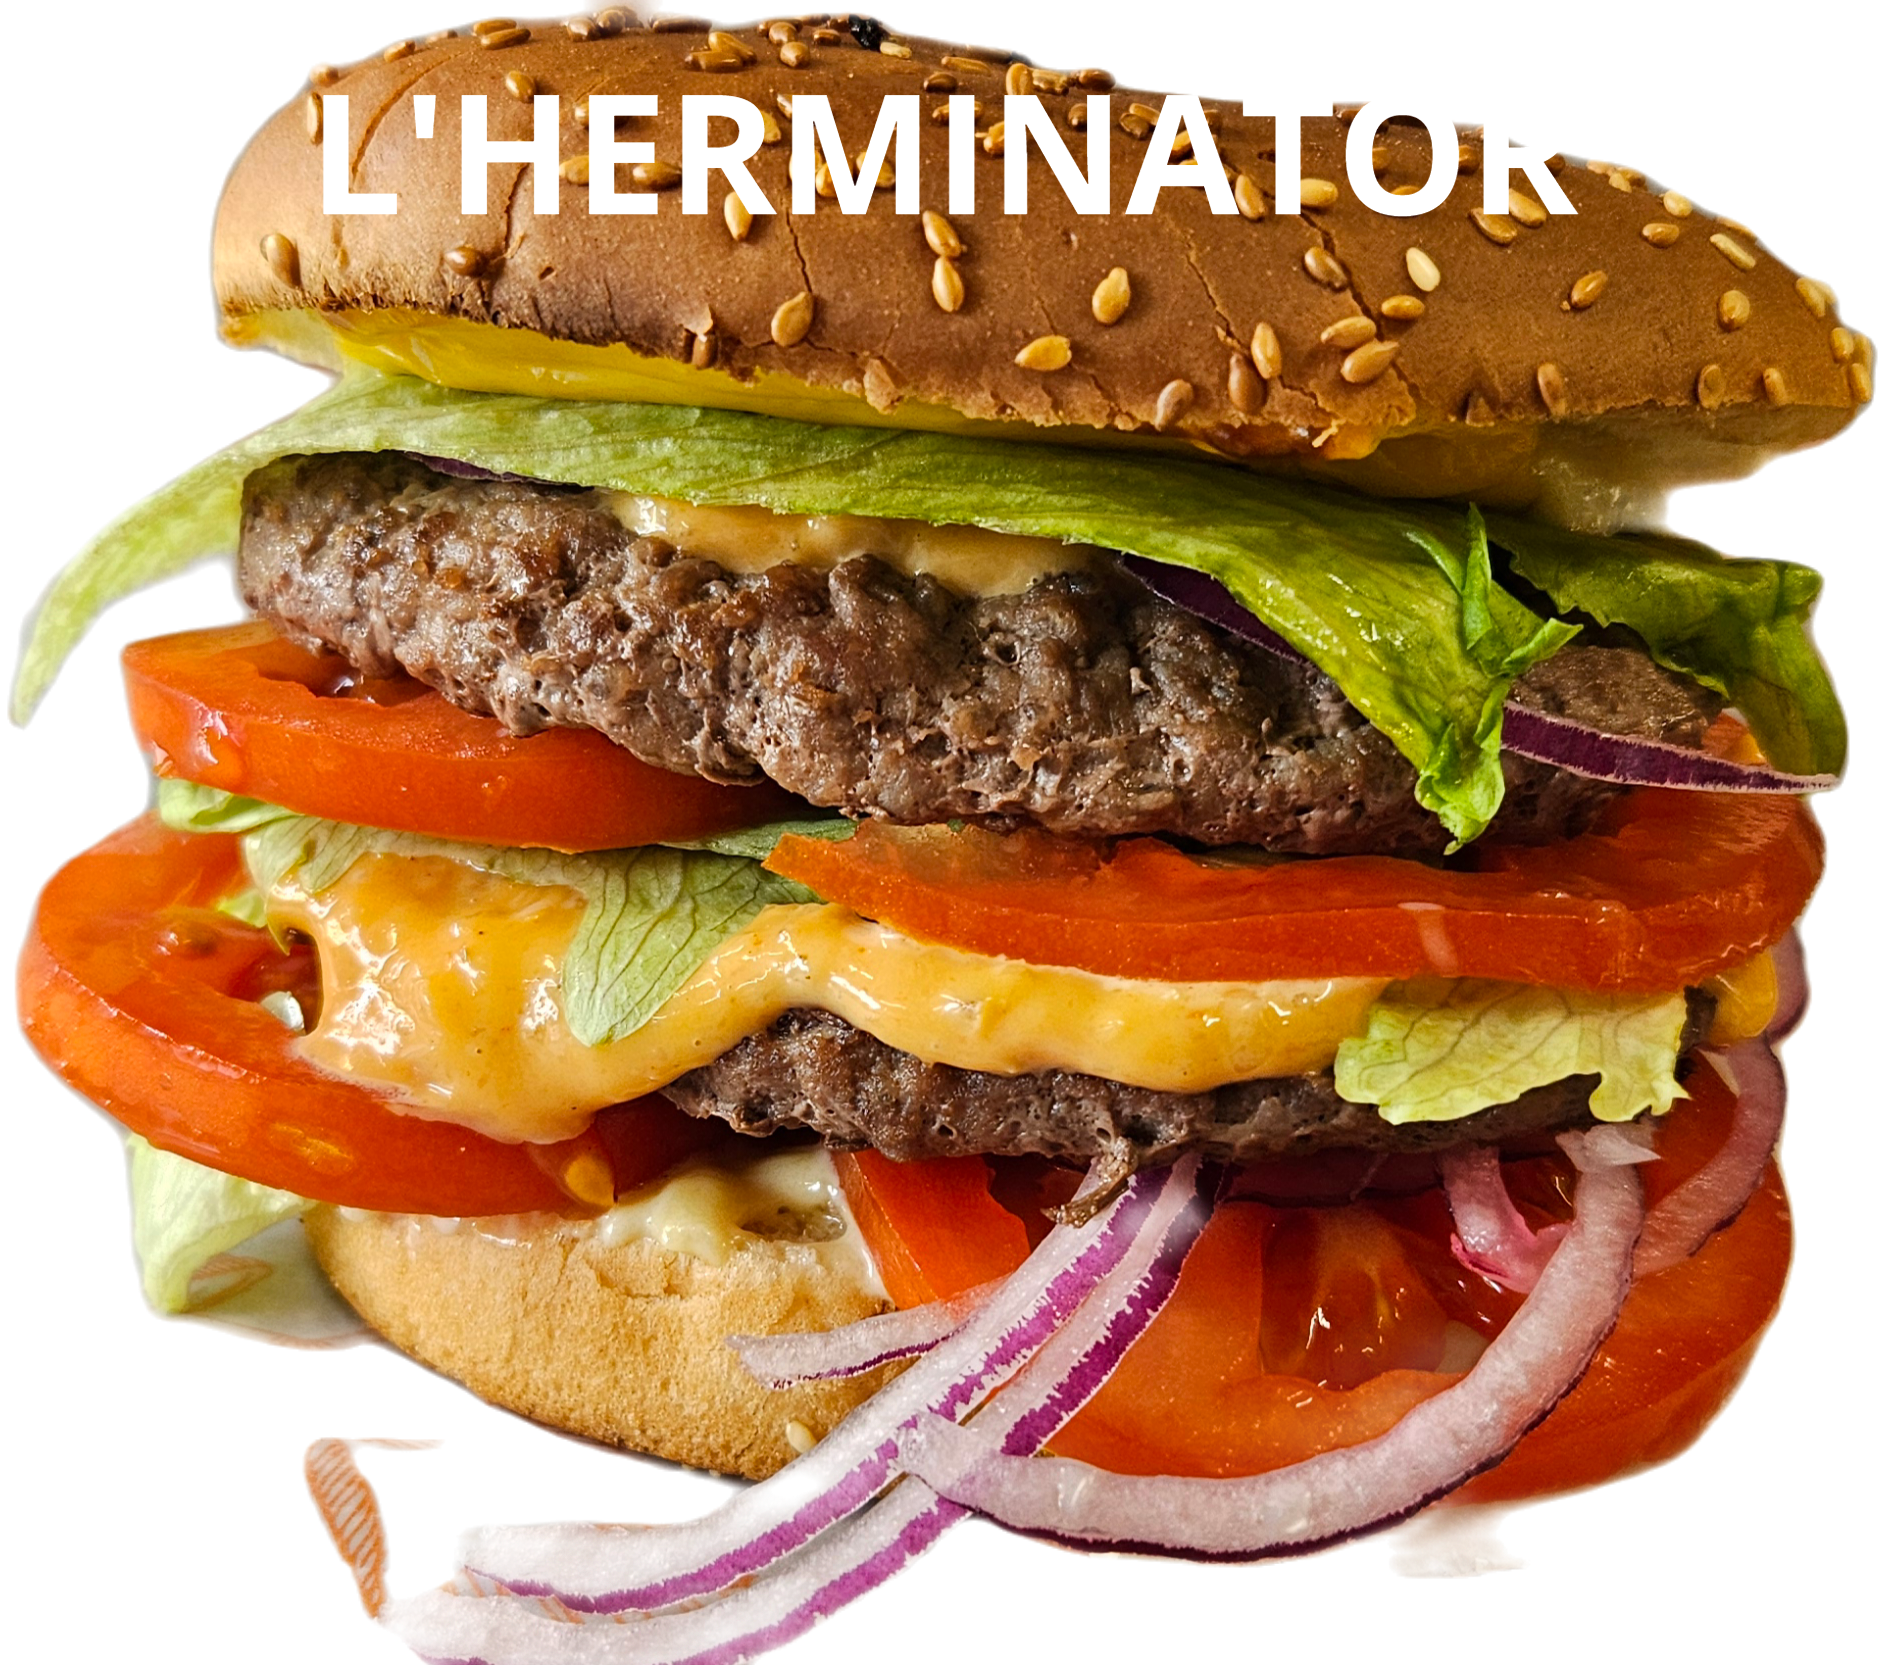 Herminator
